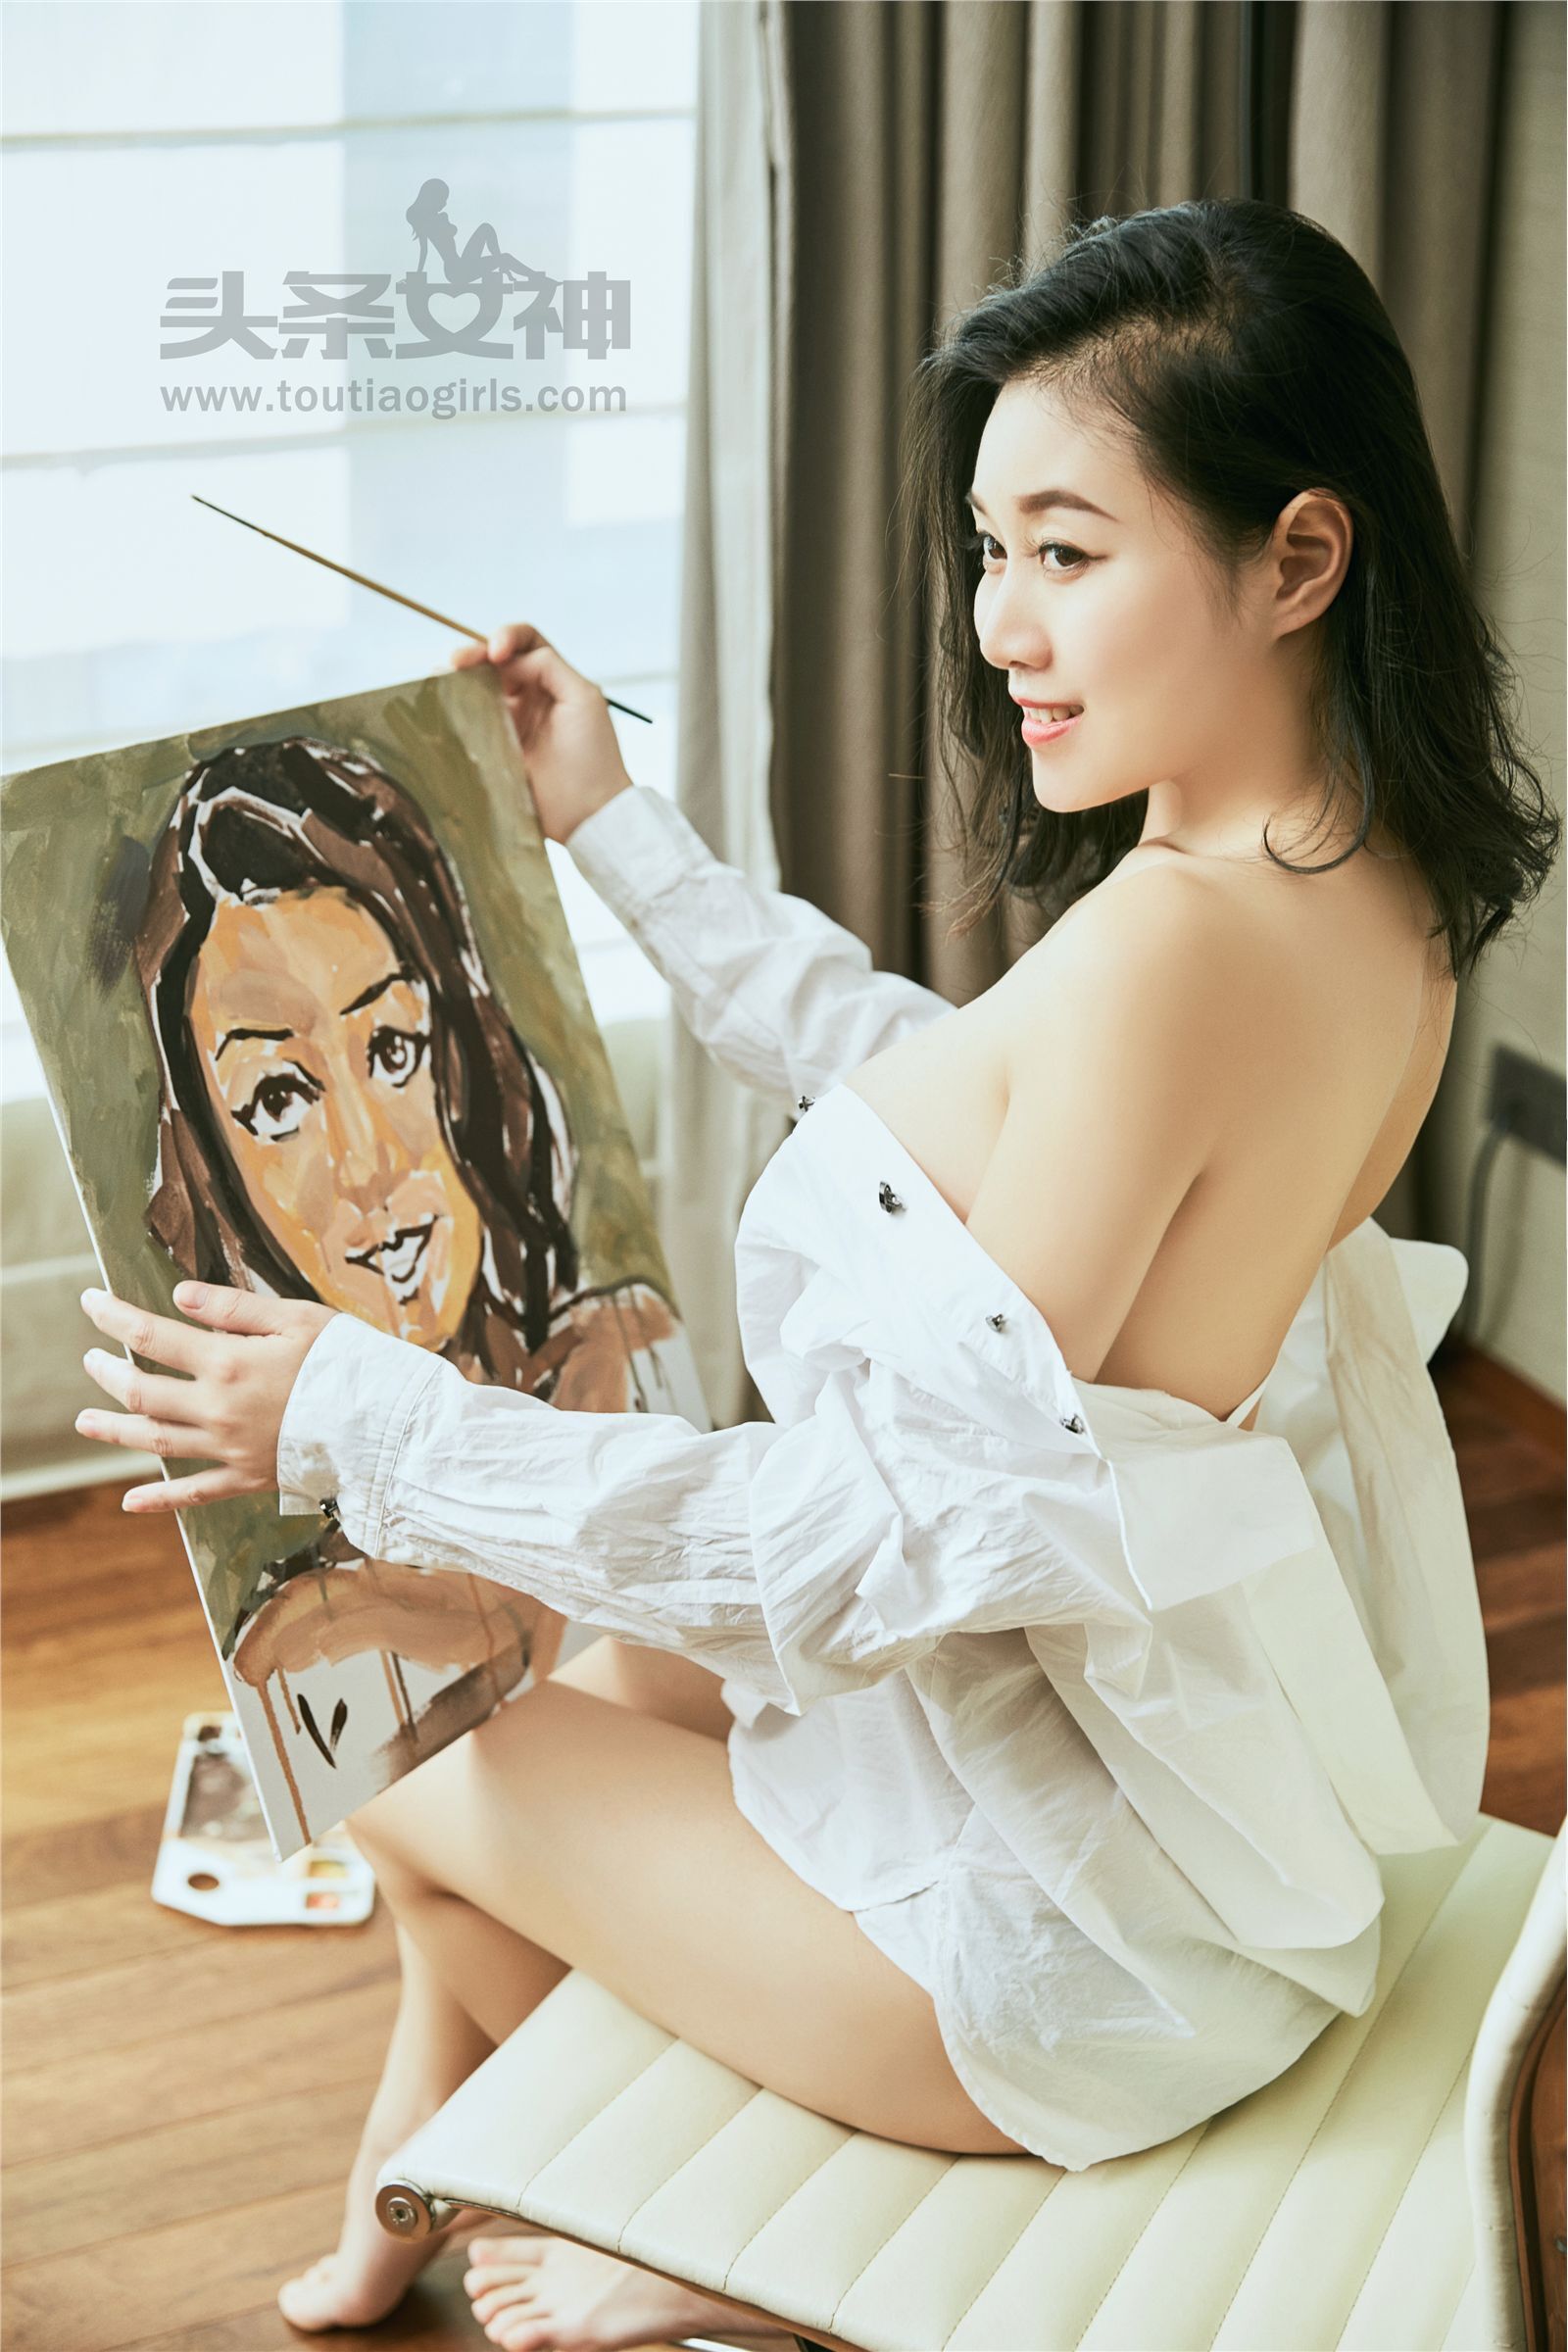 [Toutiao] Venus in Zhang Ziran's paintings on March 22, 2017